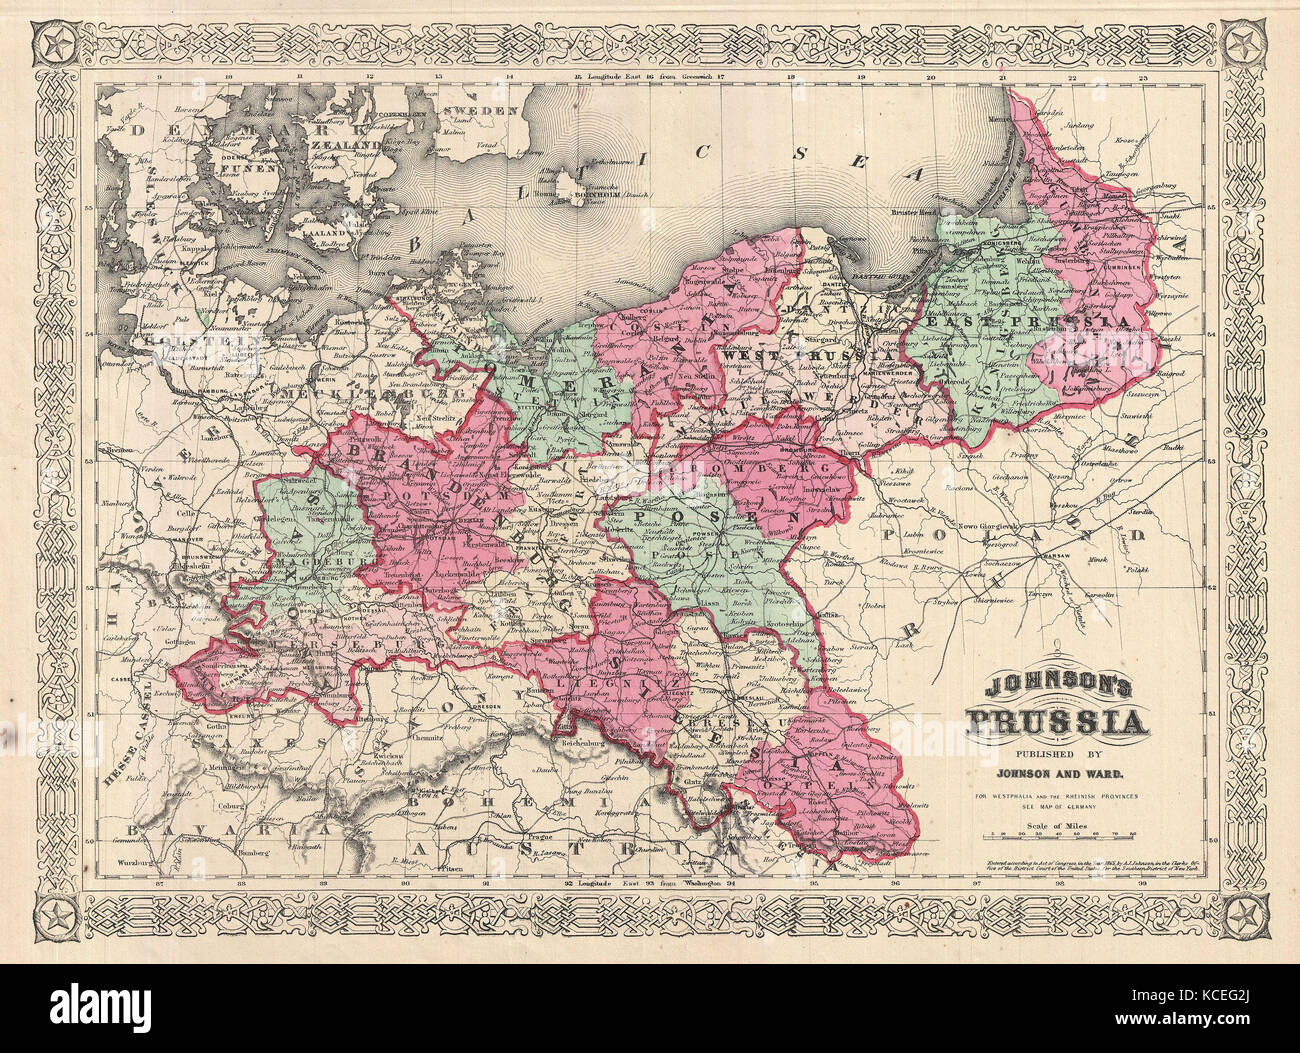 1866, Johnson Mapa de Prusia, Alemania Foto de stock